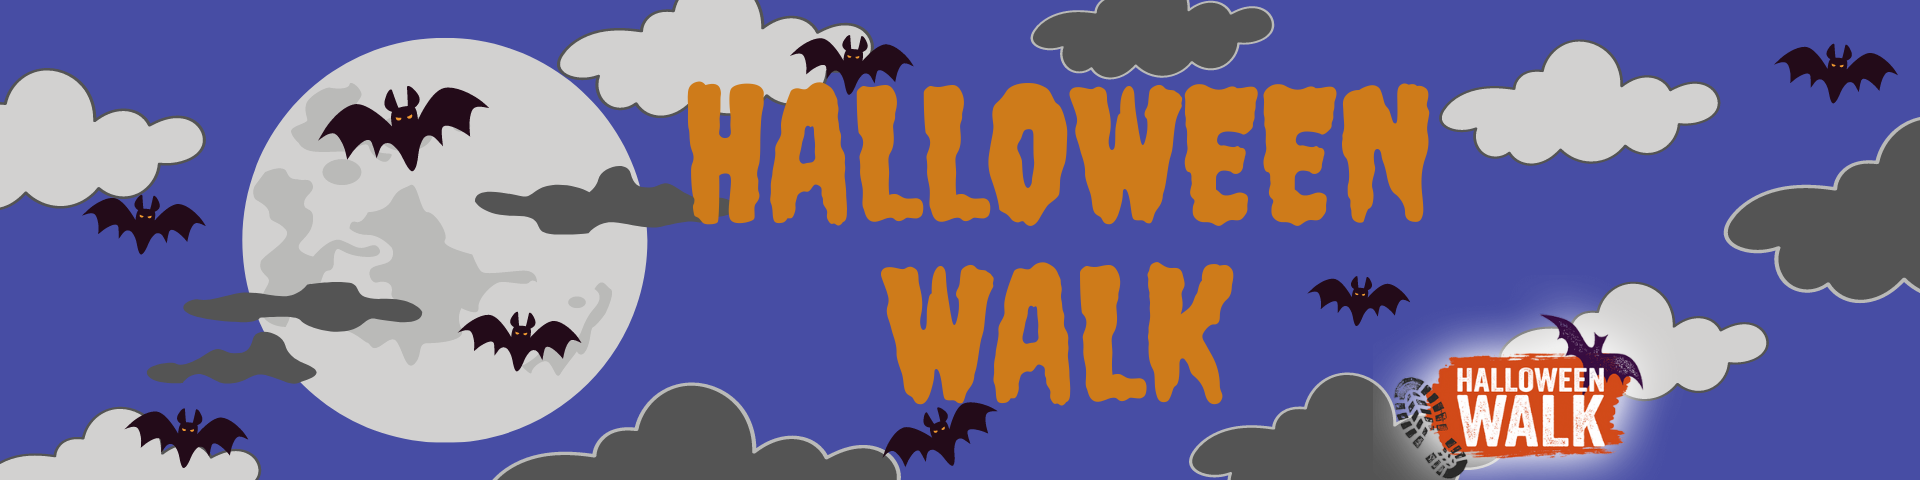 Halloween Walk (1920 X 480 Px)